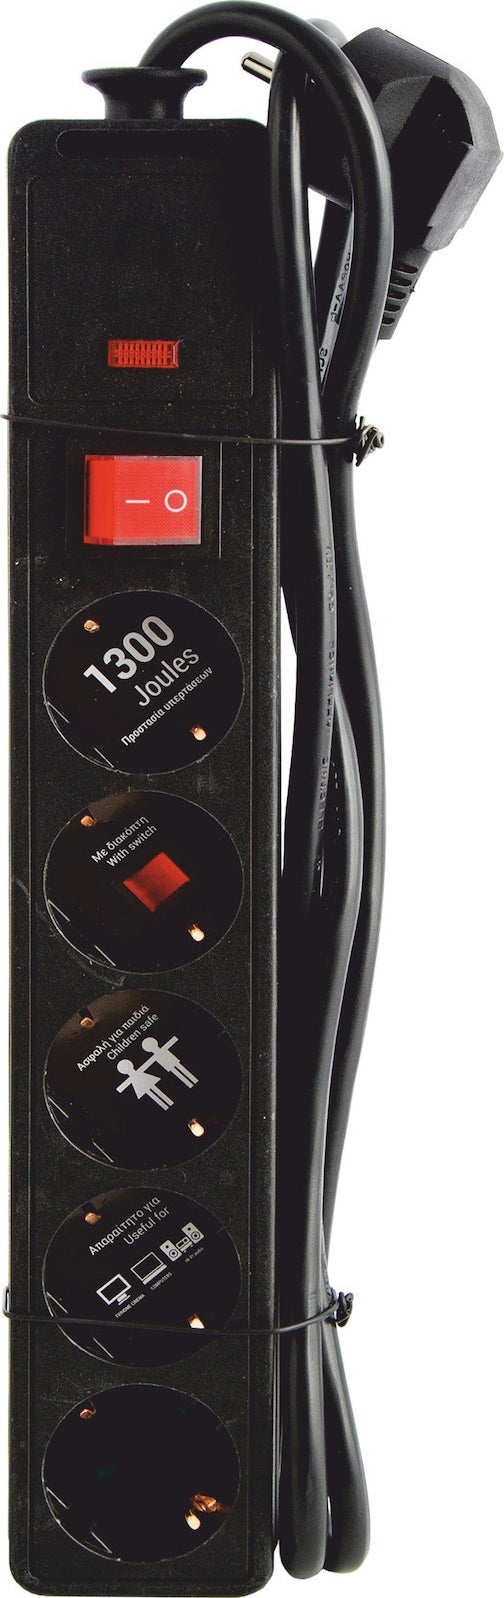 Eurolamp Πολύπριζο Ασφαλείας με Κουμπί 3*1.5mm Καλώδιο 1.5m Μαύρο